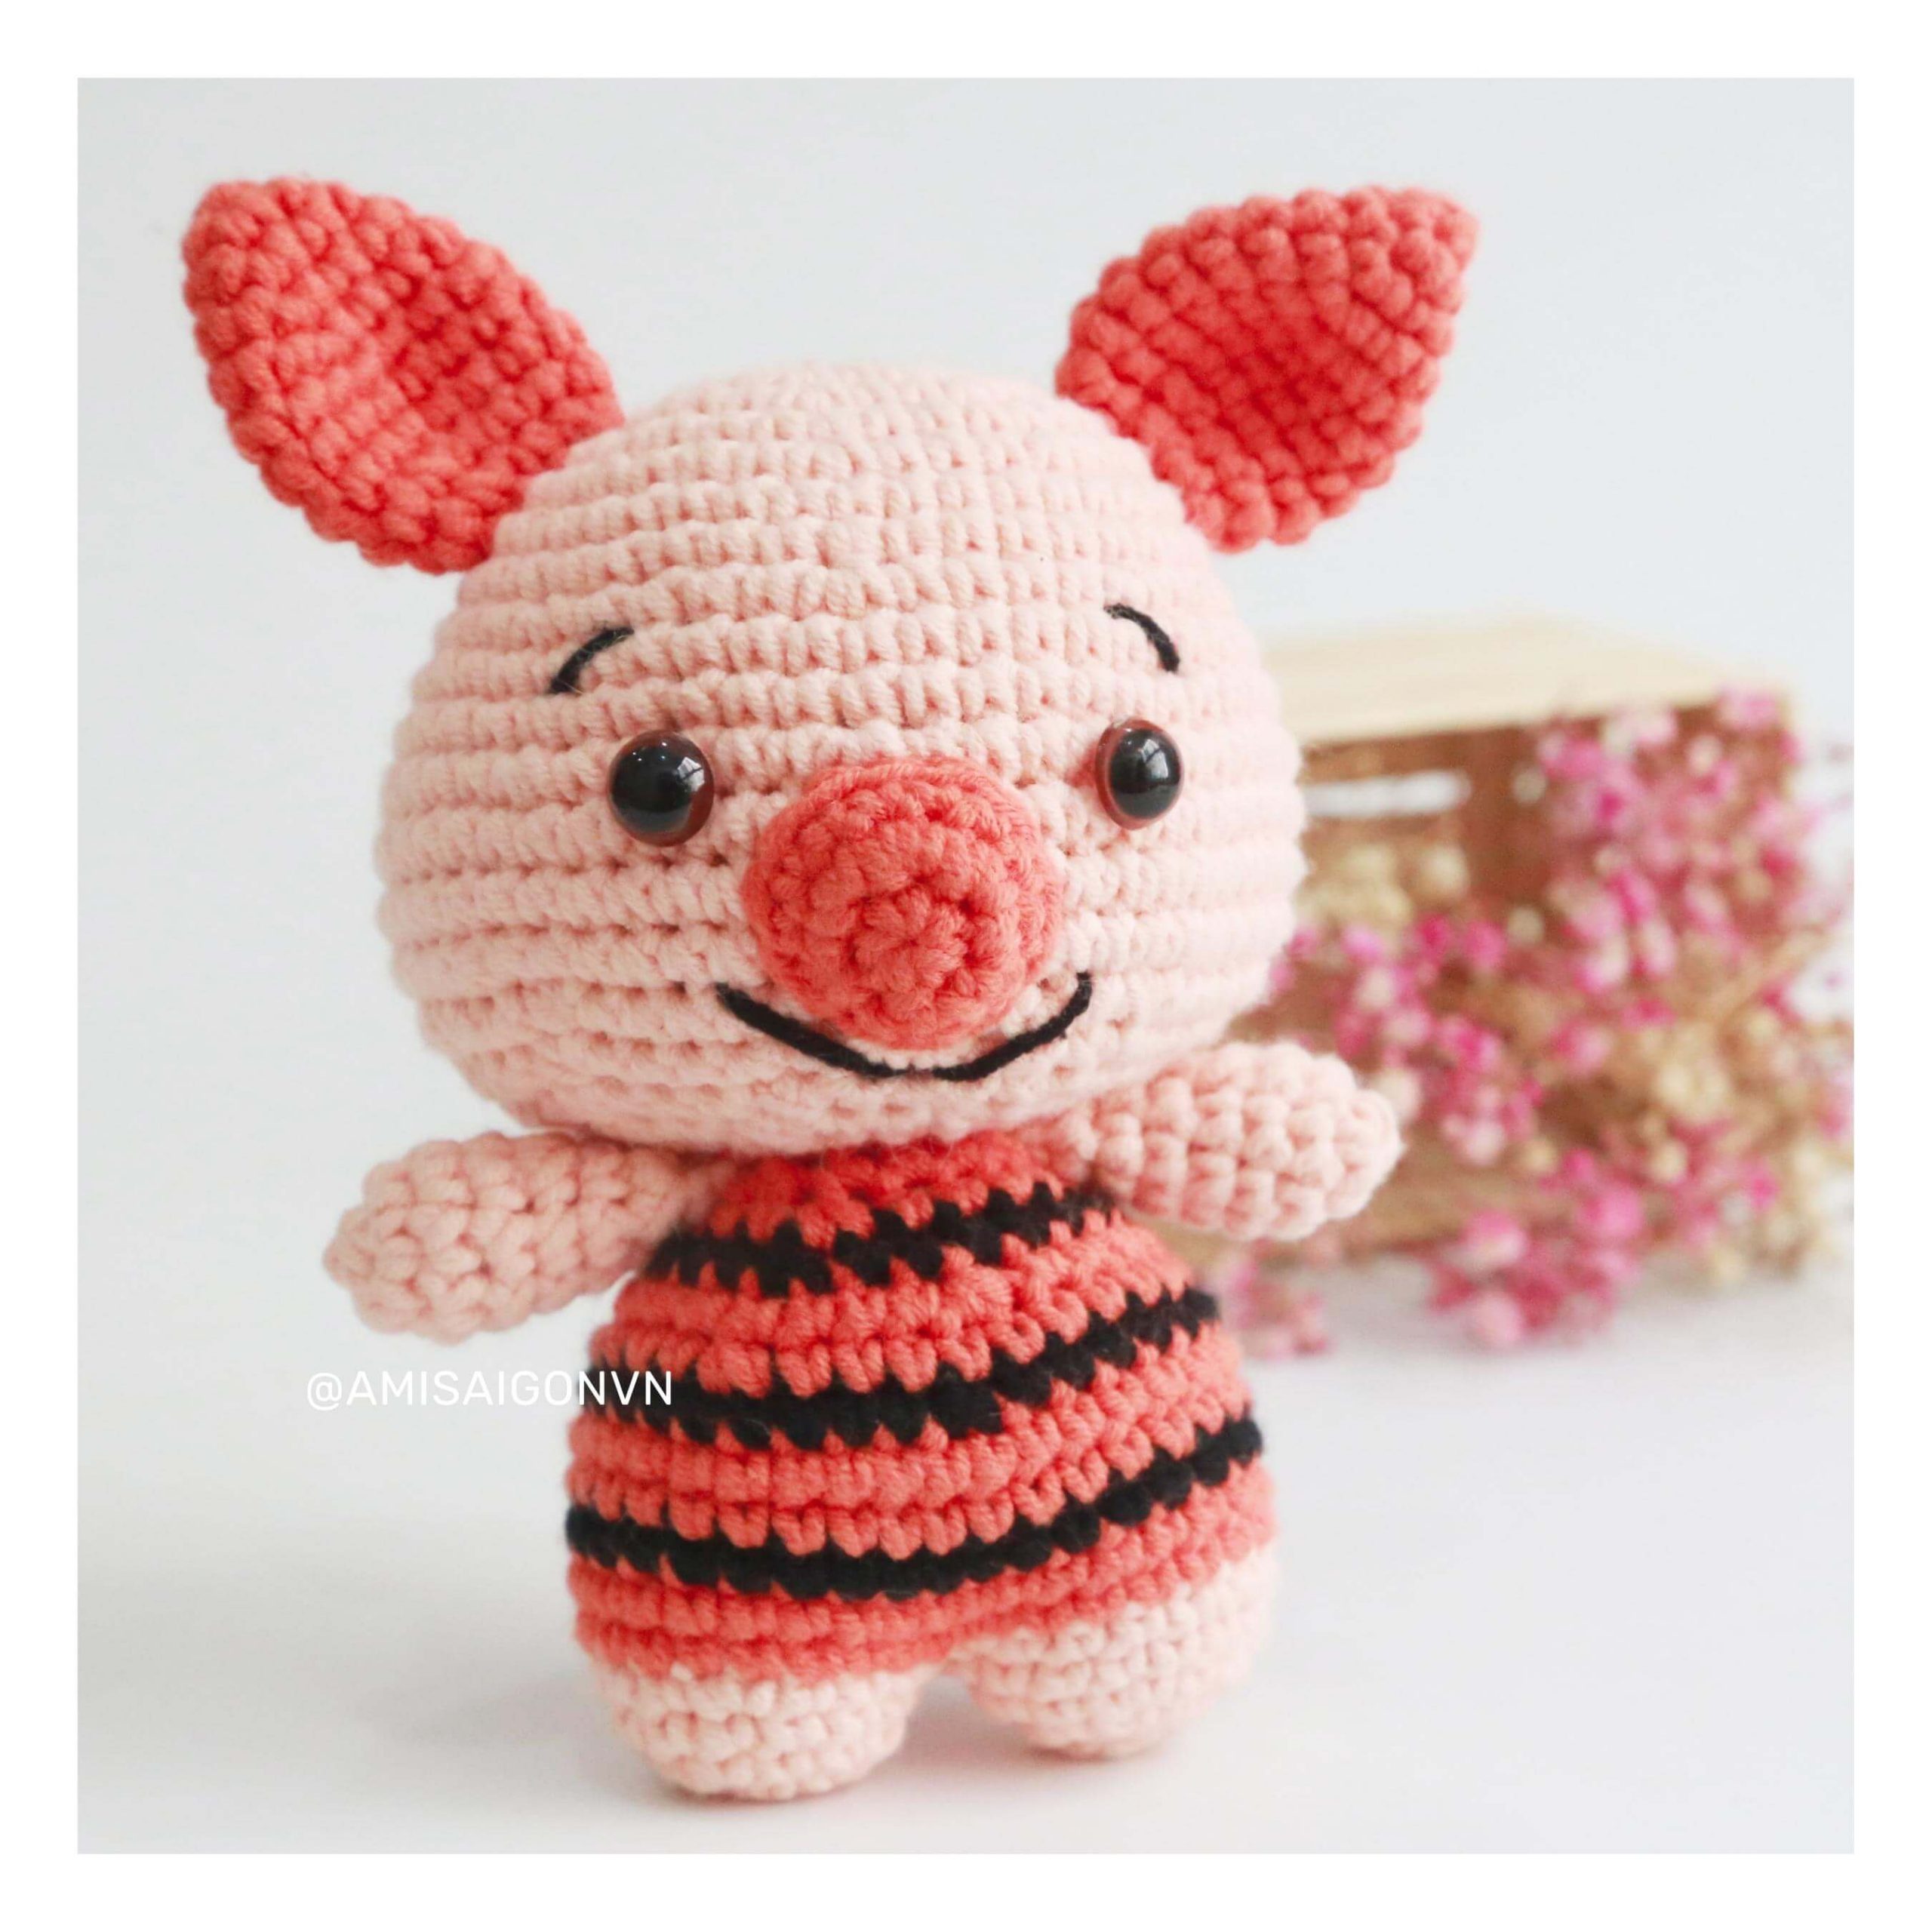 piglet-let-amigurumi-crochet-pattern-by-amisaigon (8)